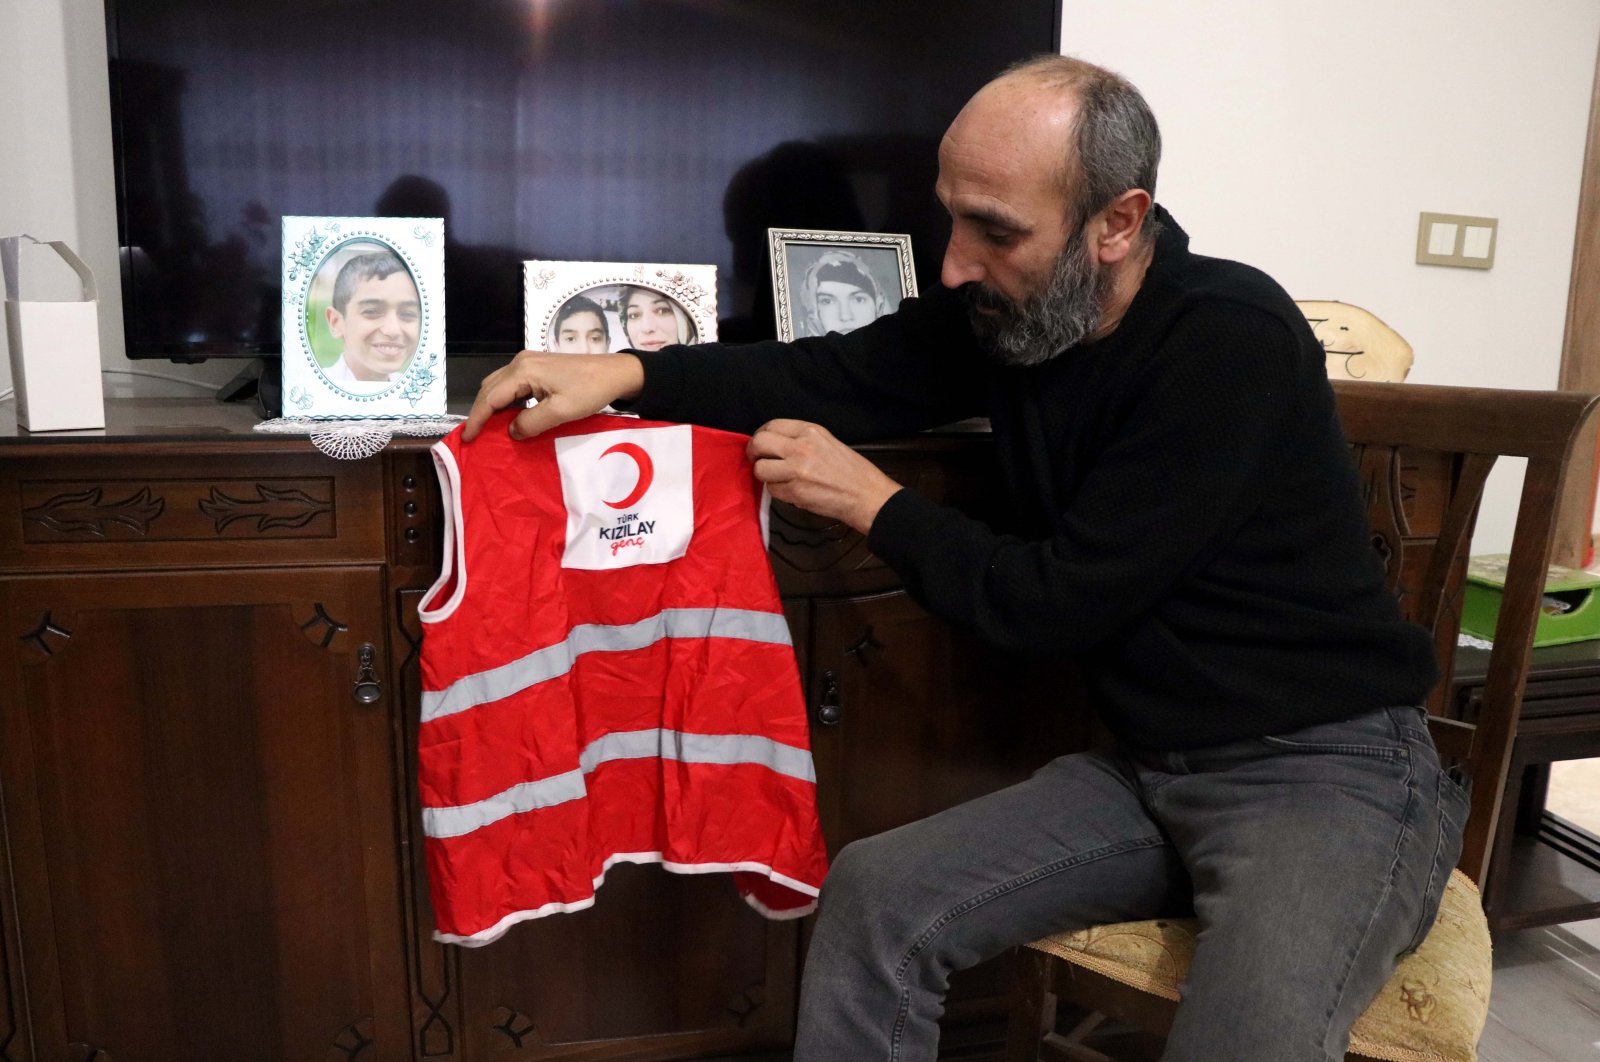 Elazığ Turki pulih dari gempa 2020 tetapi trauma tetap ada